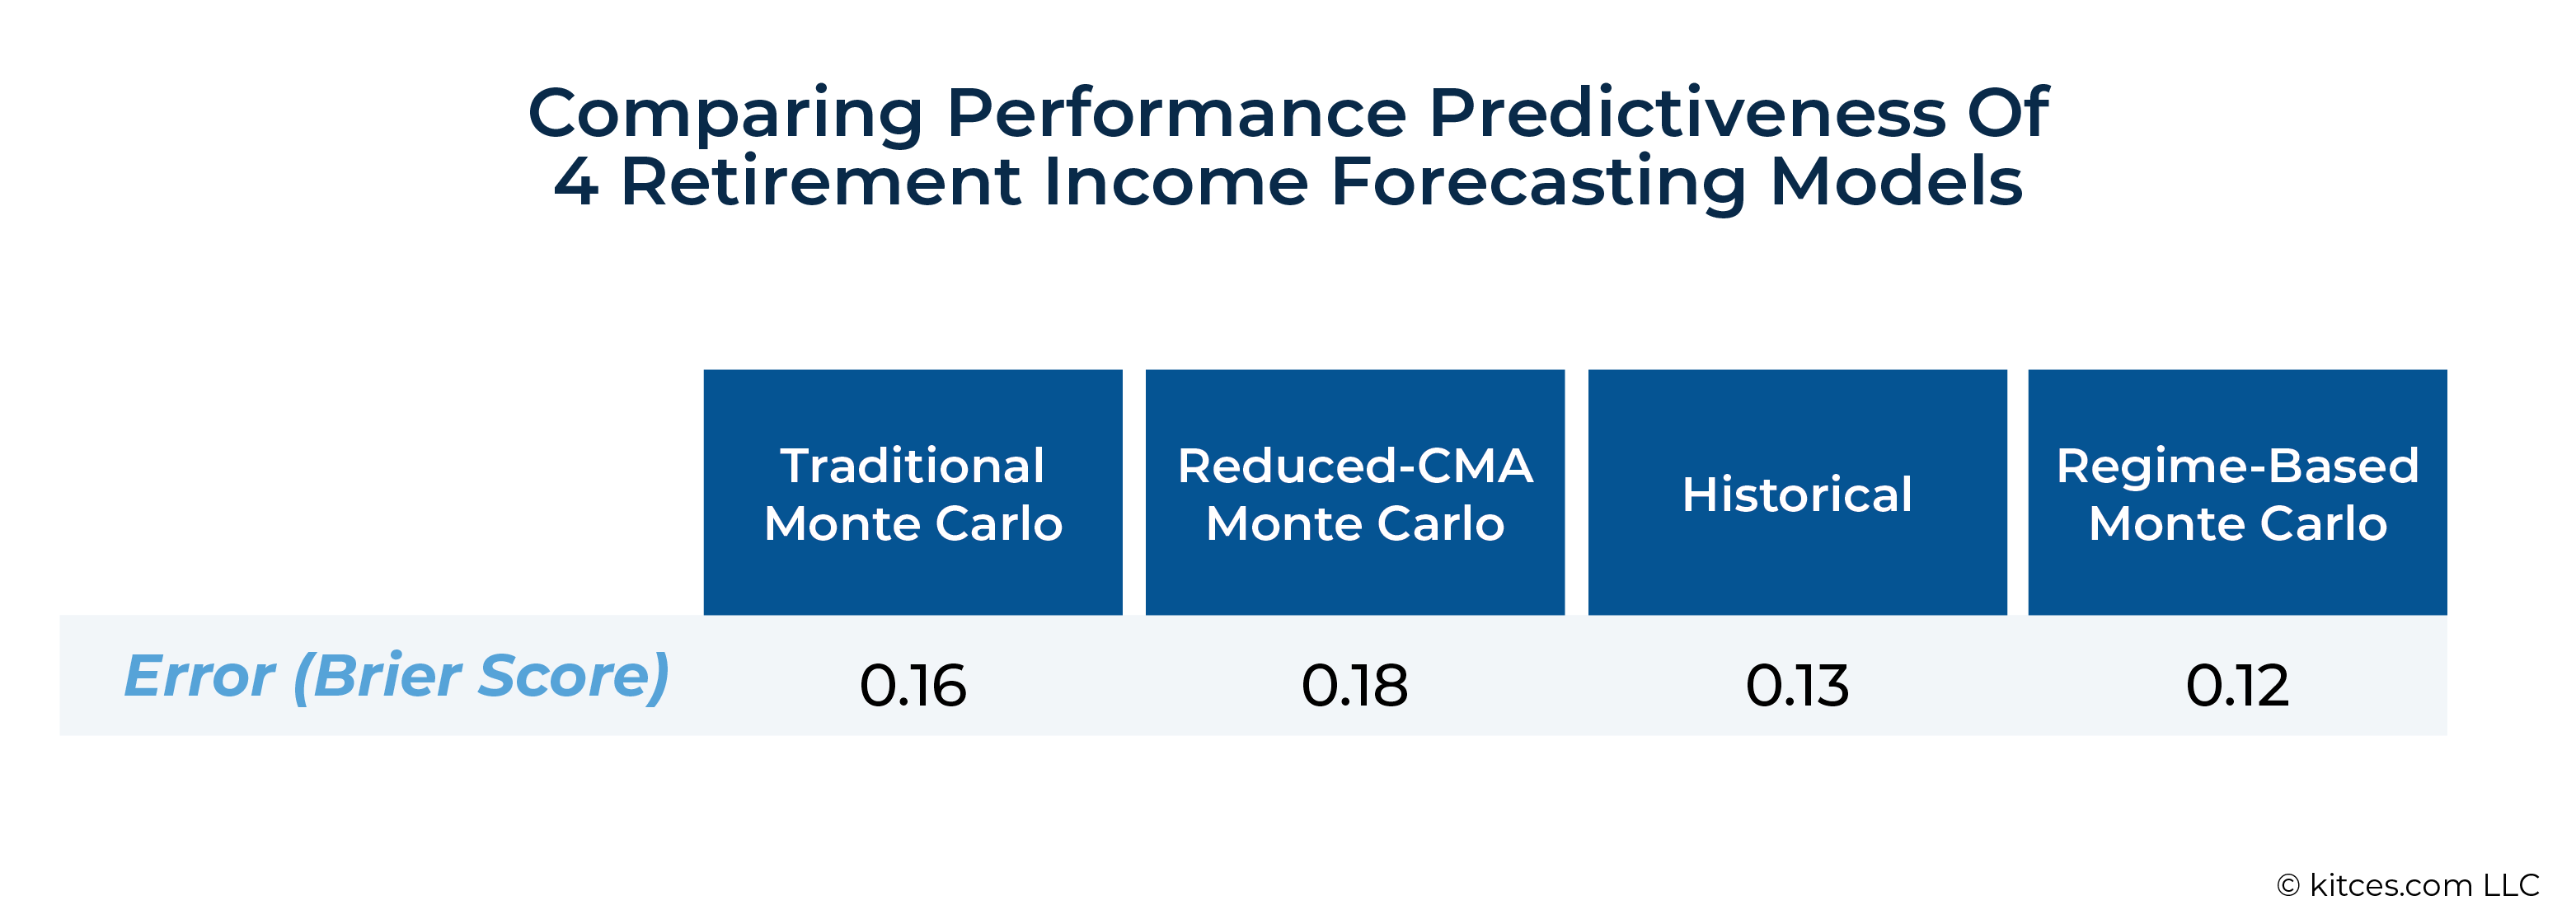 Comparing Performance Predictiveness Of Retirement Monte Carlo Models